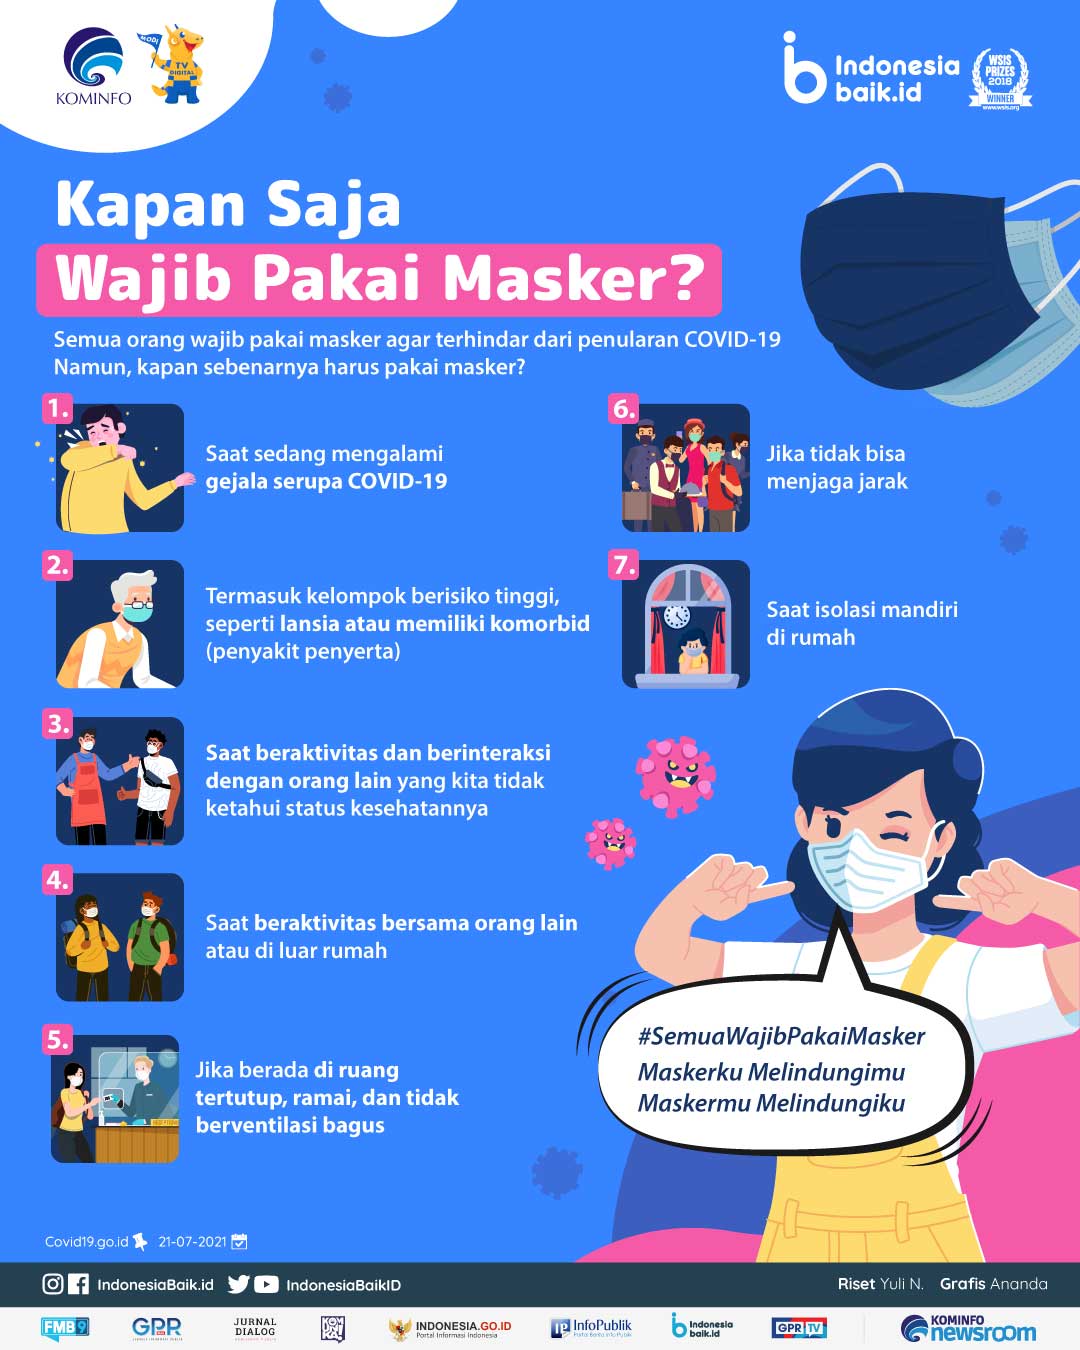 Kapan Saja Wajib Pakai Masker Indonesia Baik